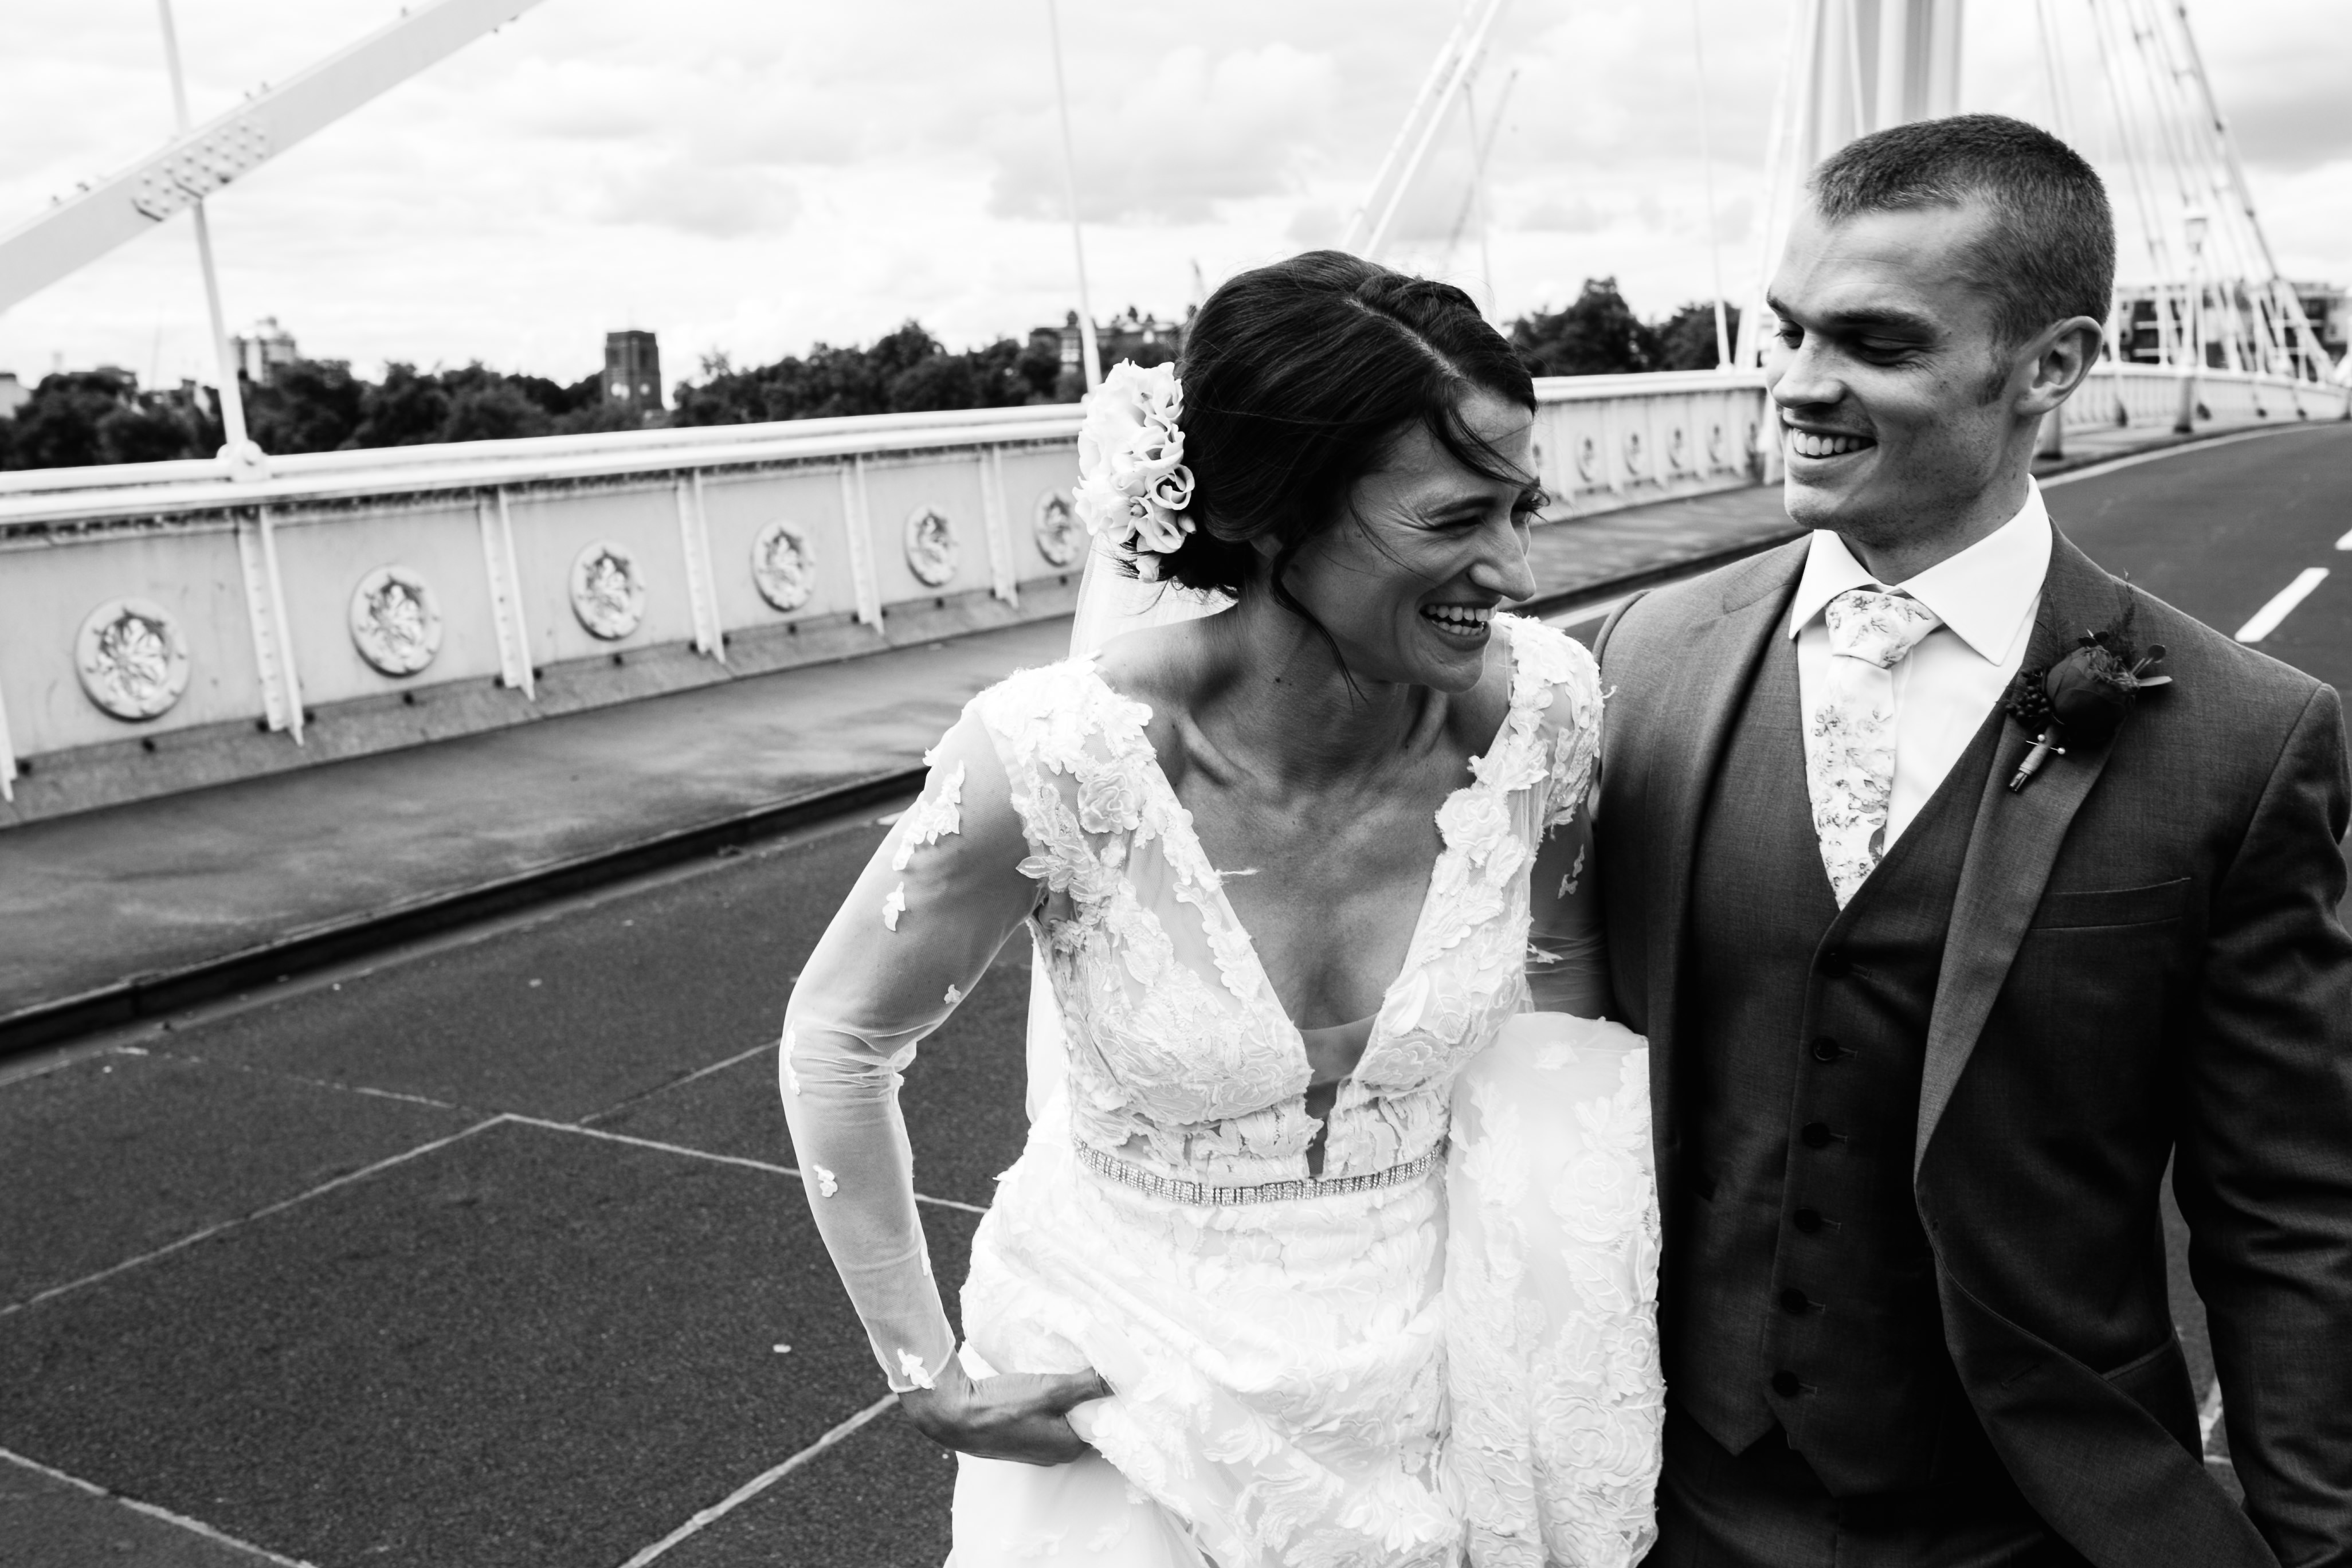 wedding photos at battersea park by london wedding photographer